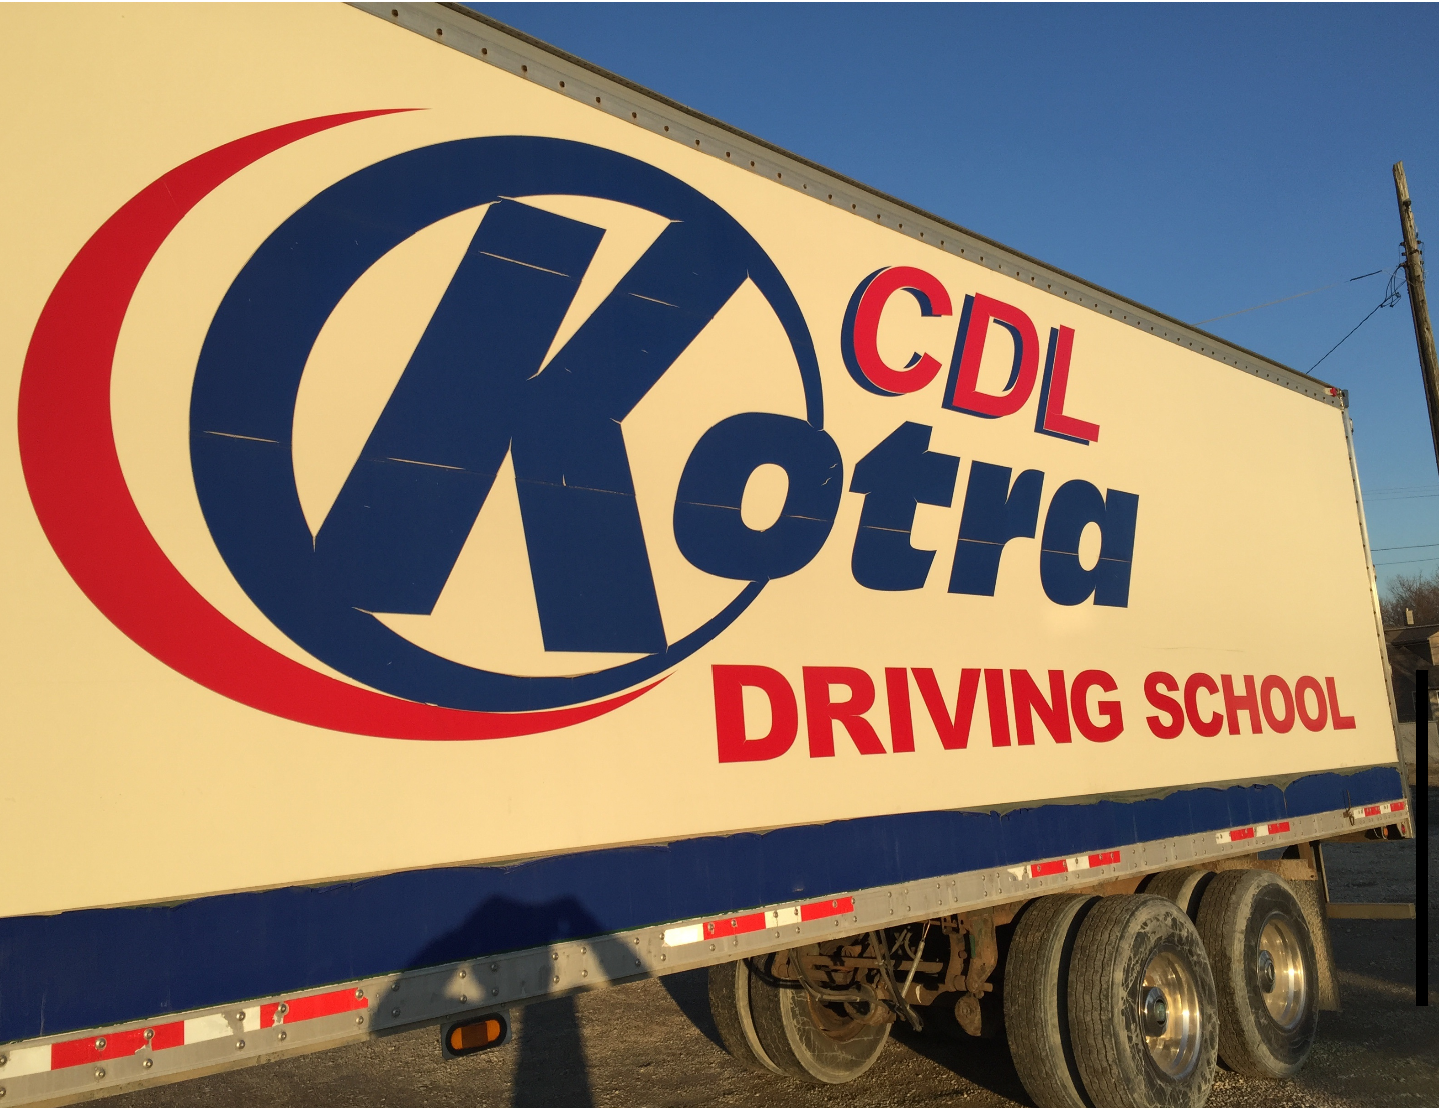 CDL Kotra Driving School